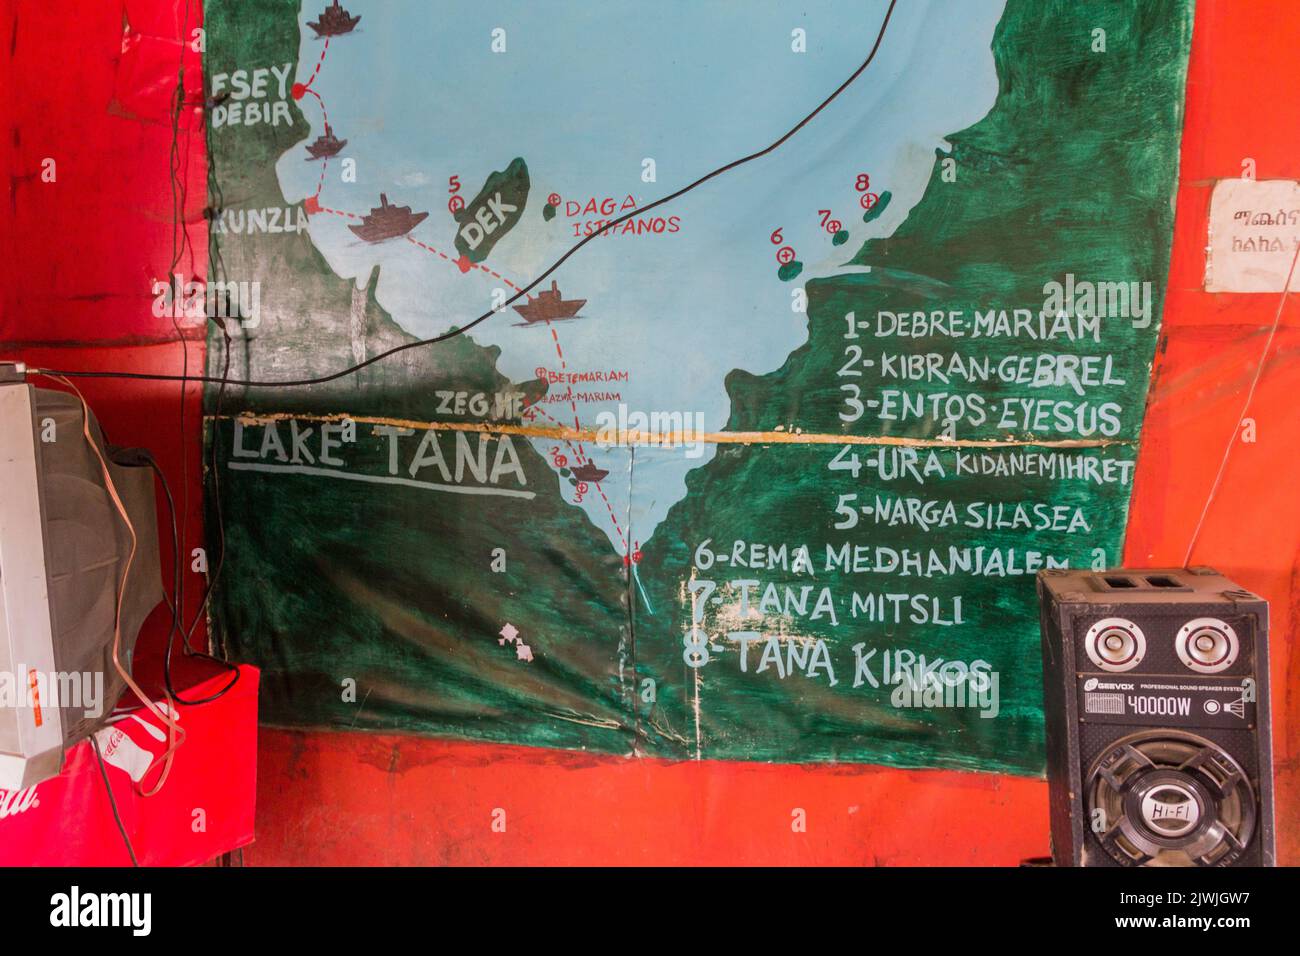 BAHIR DAR, ÄTHIOPIEN - 1. APRIL 2019: Karte der Lake Tana Klöster in einer lokalen Bar in Bahir dar, Äthiopien Stockfoto